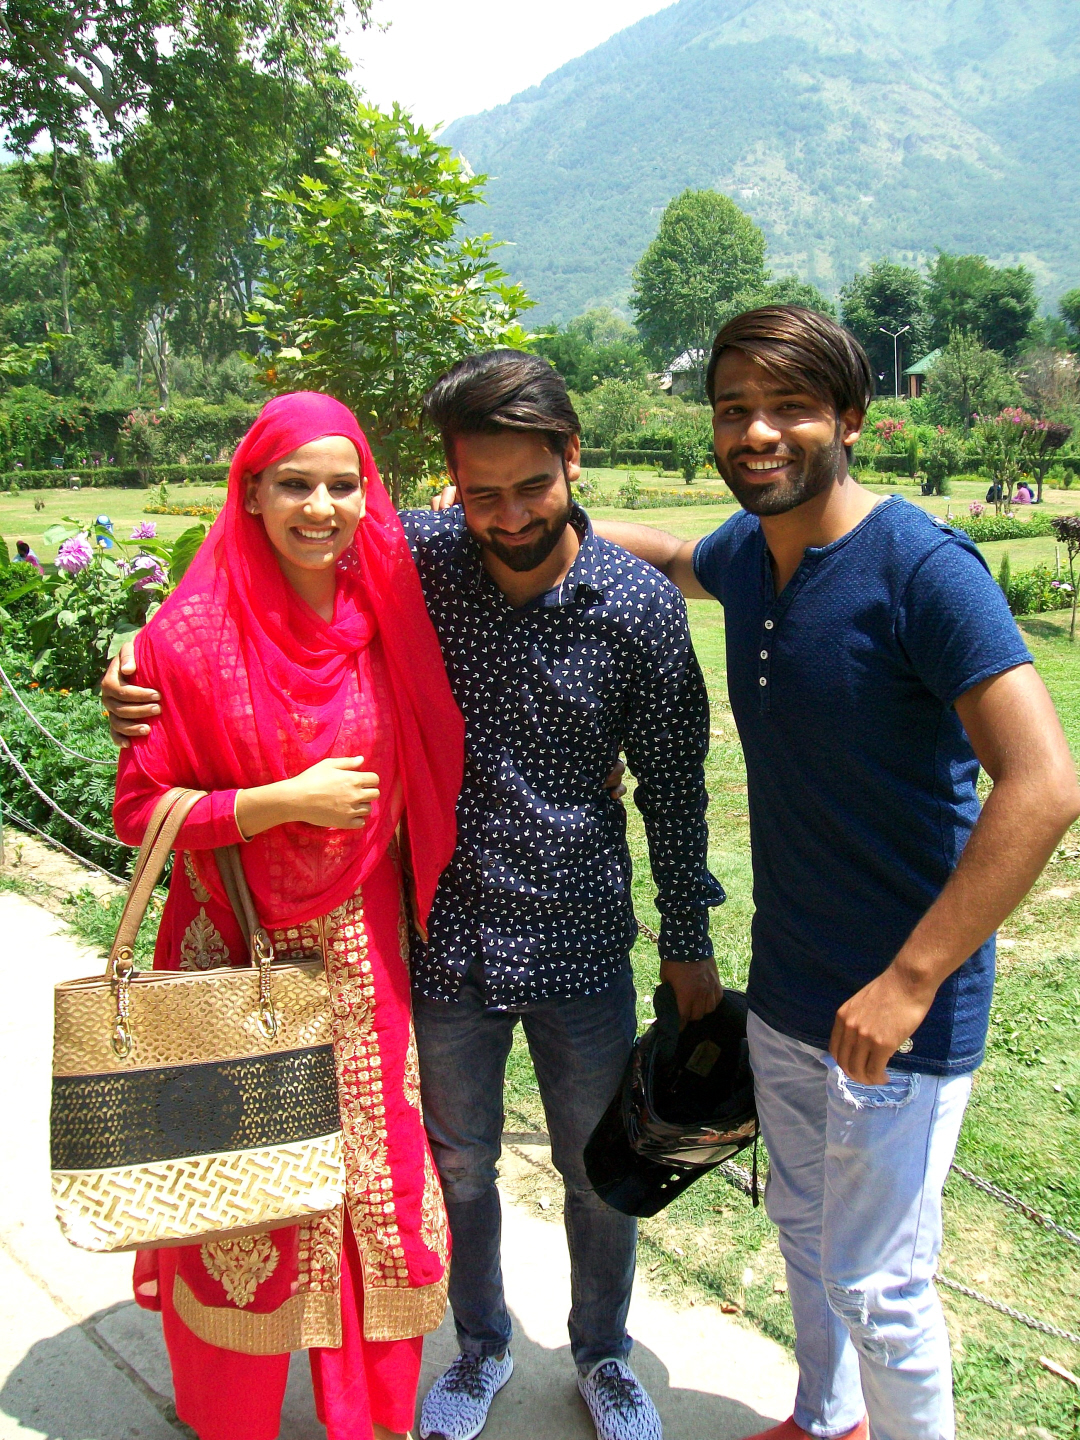 Enjoying a Beautiful Day Shalimar Gardens - Srinagar, Kashmir